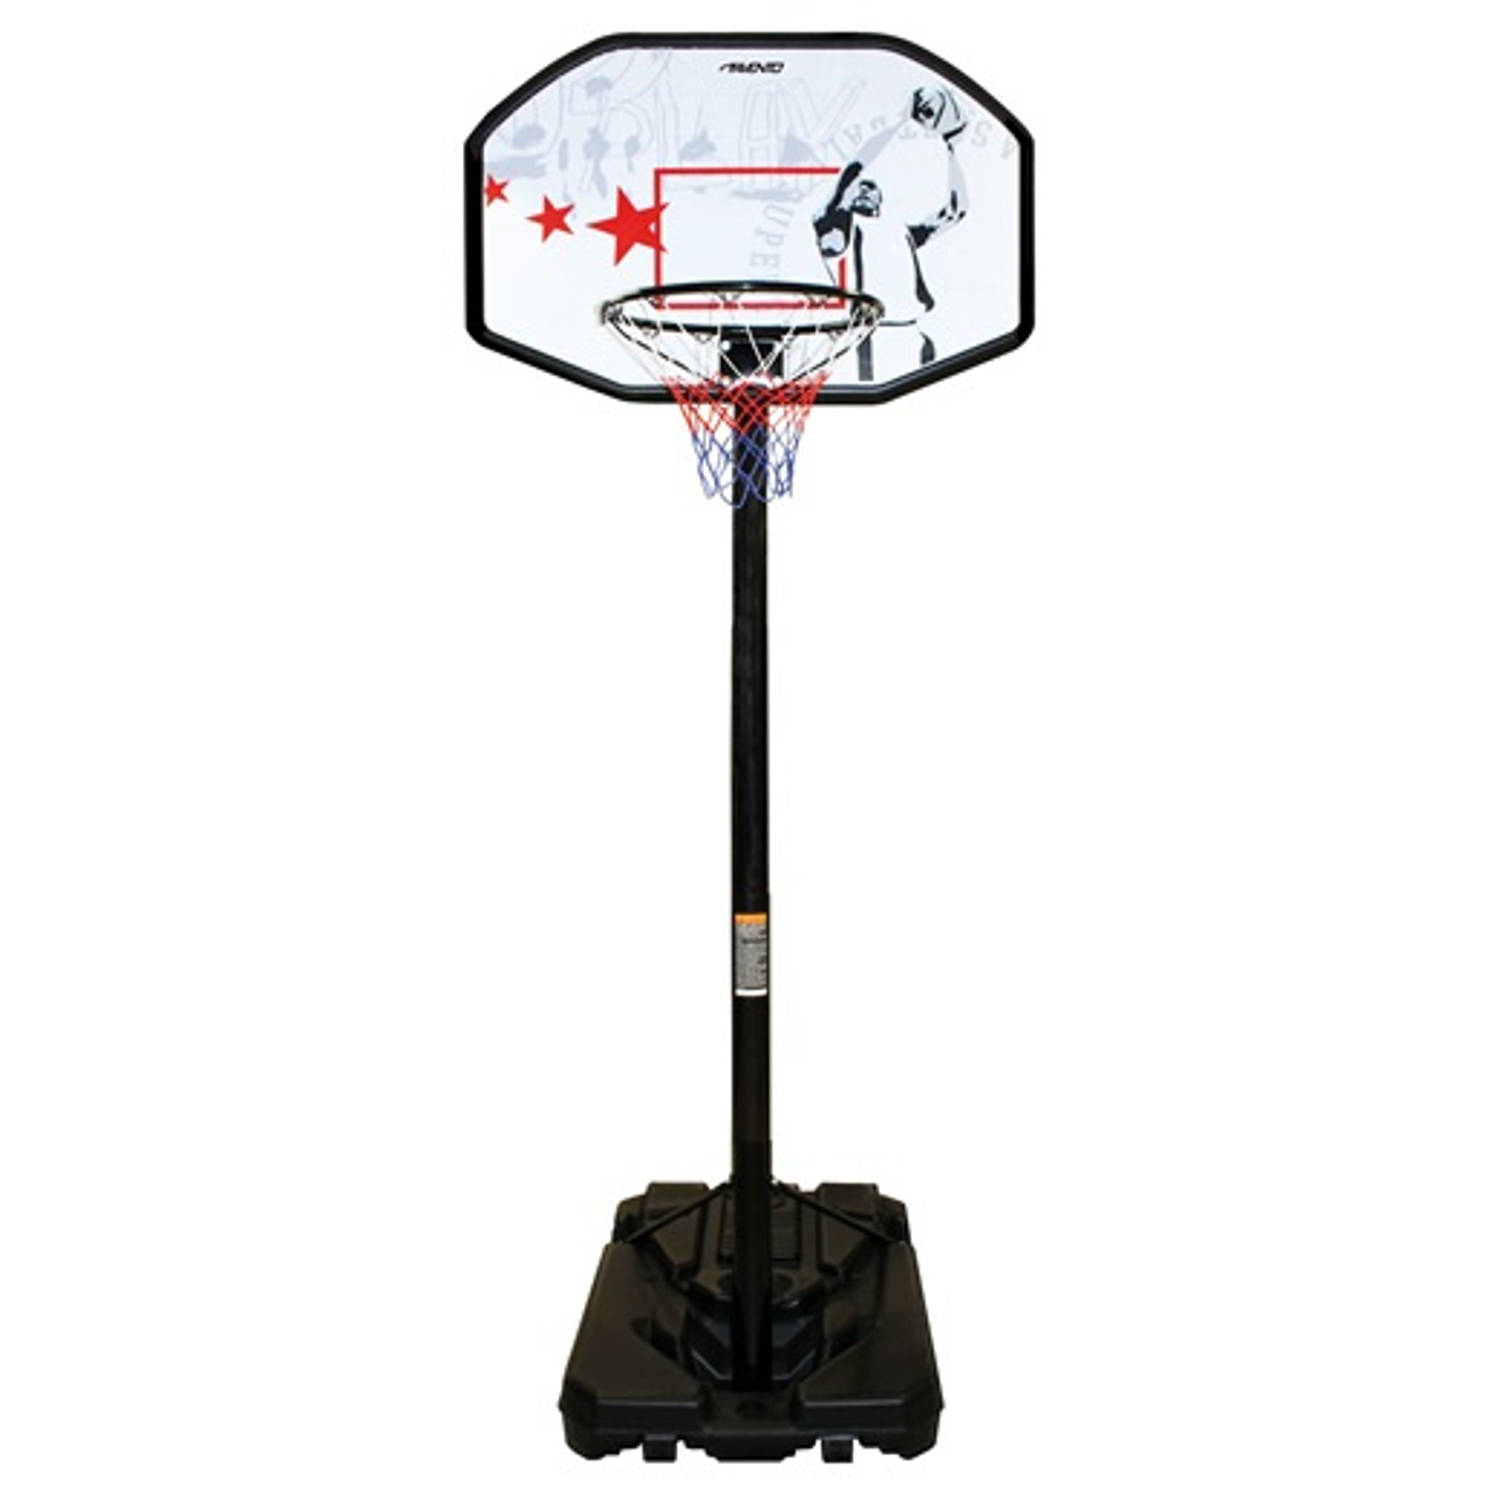 Avento basketbalstandaard 200 305 cm PE zwart-wit-rood